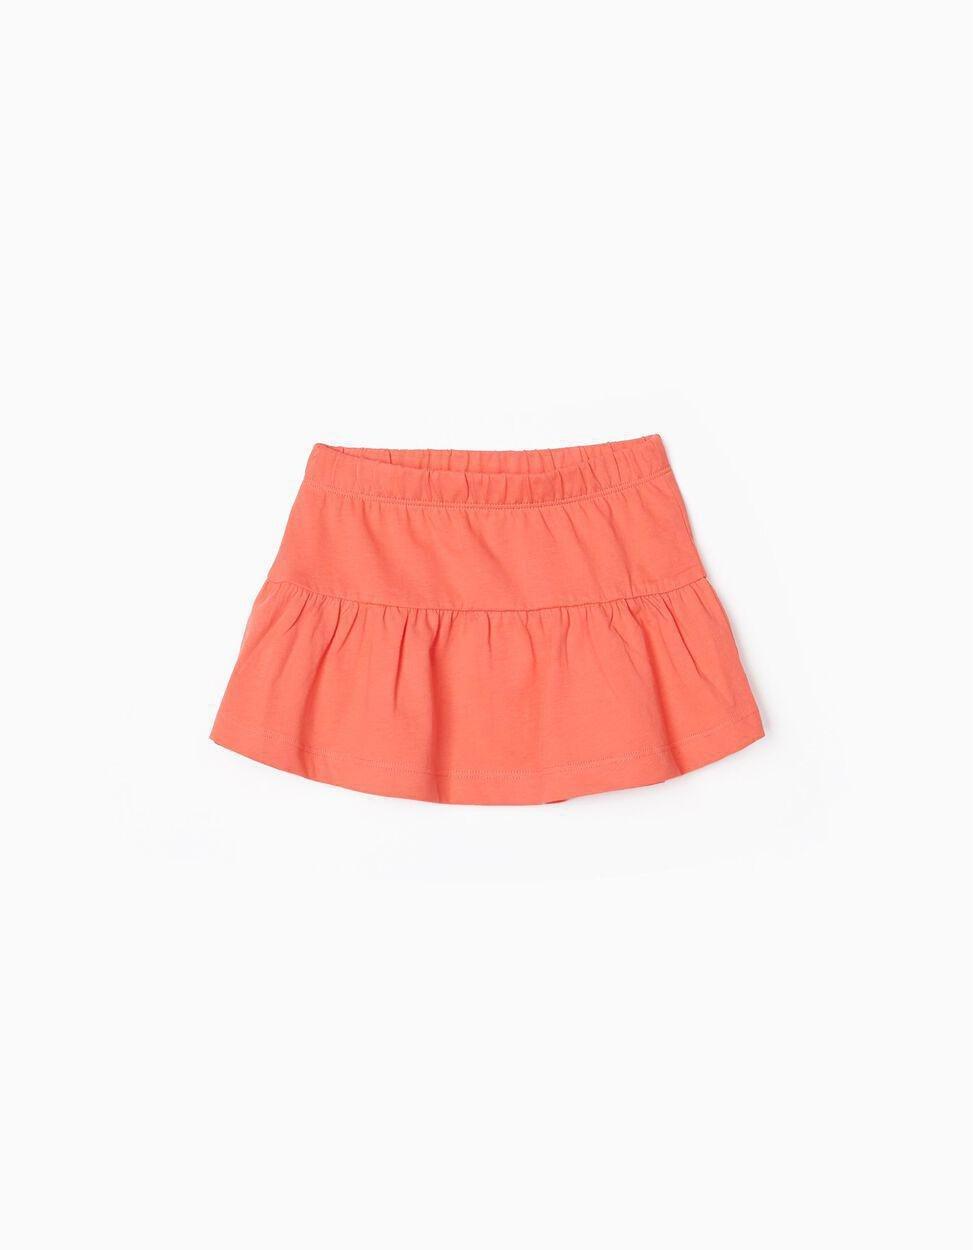 Zippy - Zippy Jersey Skirt For Baby Girls, Orange